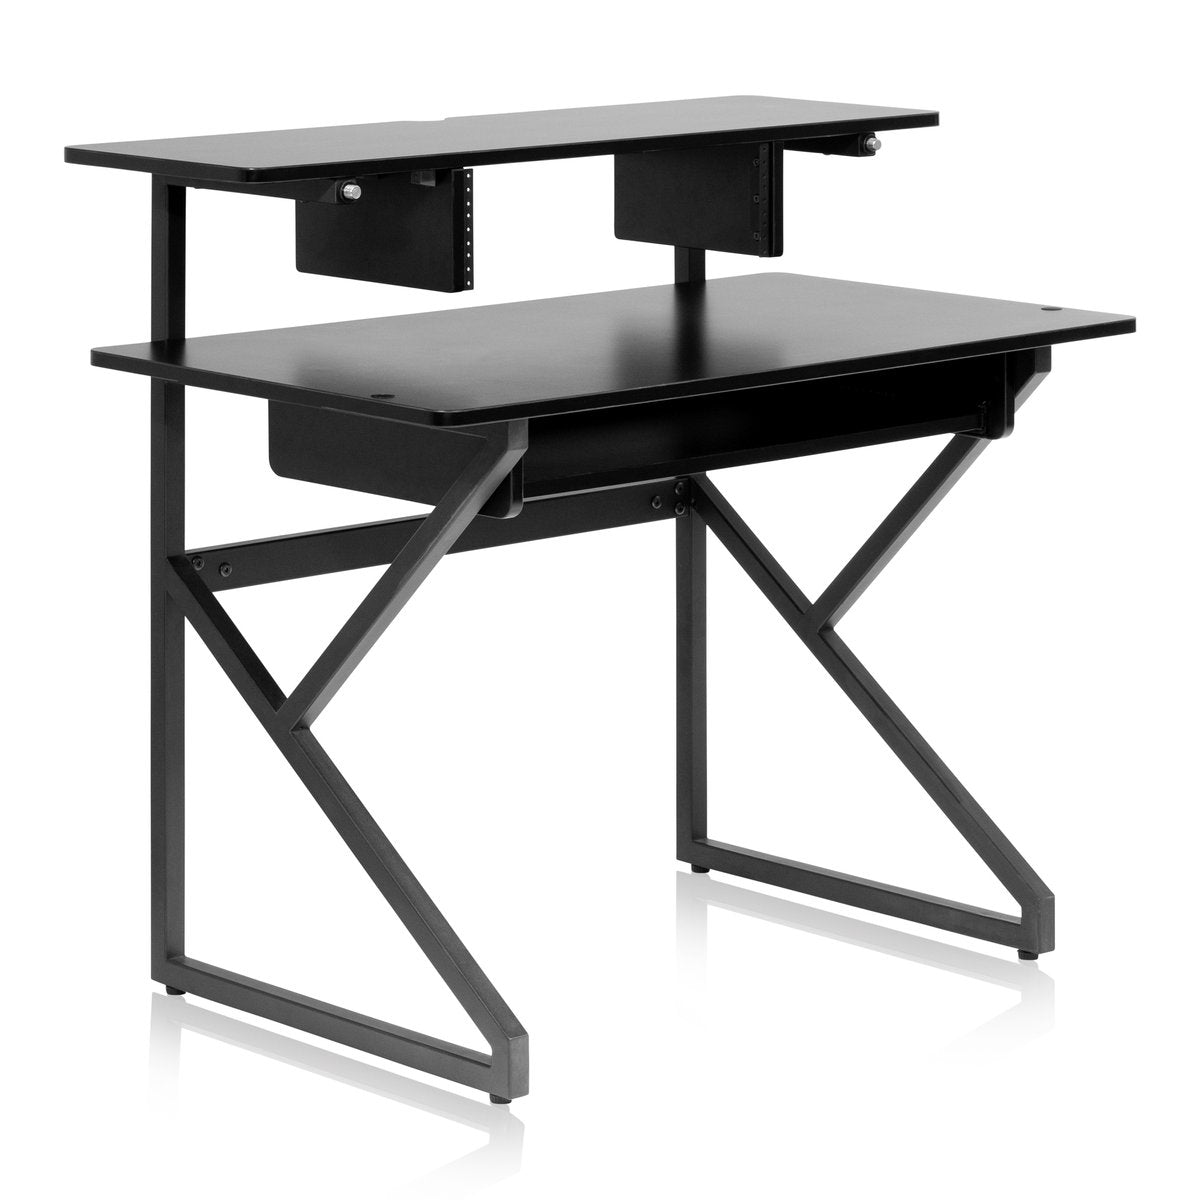 Content Creator Furniture Series Main Desk in Black Finish